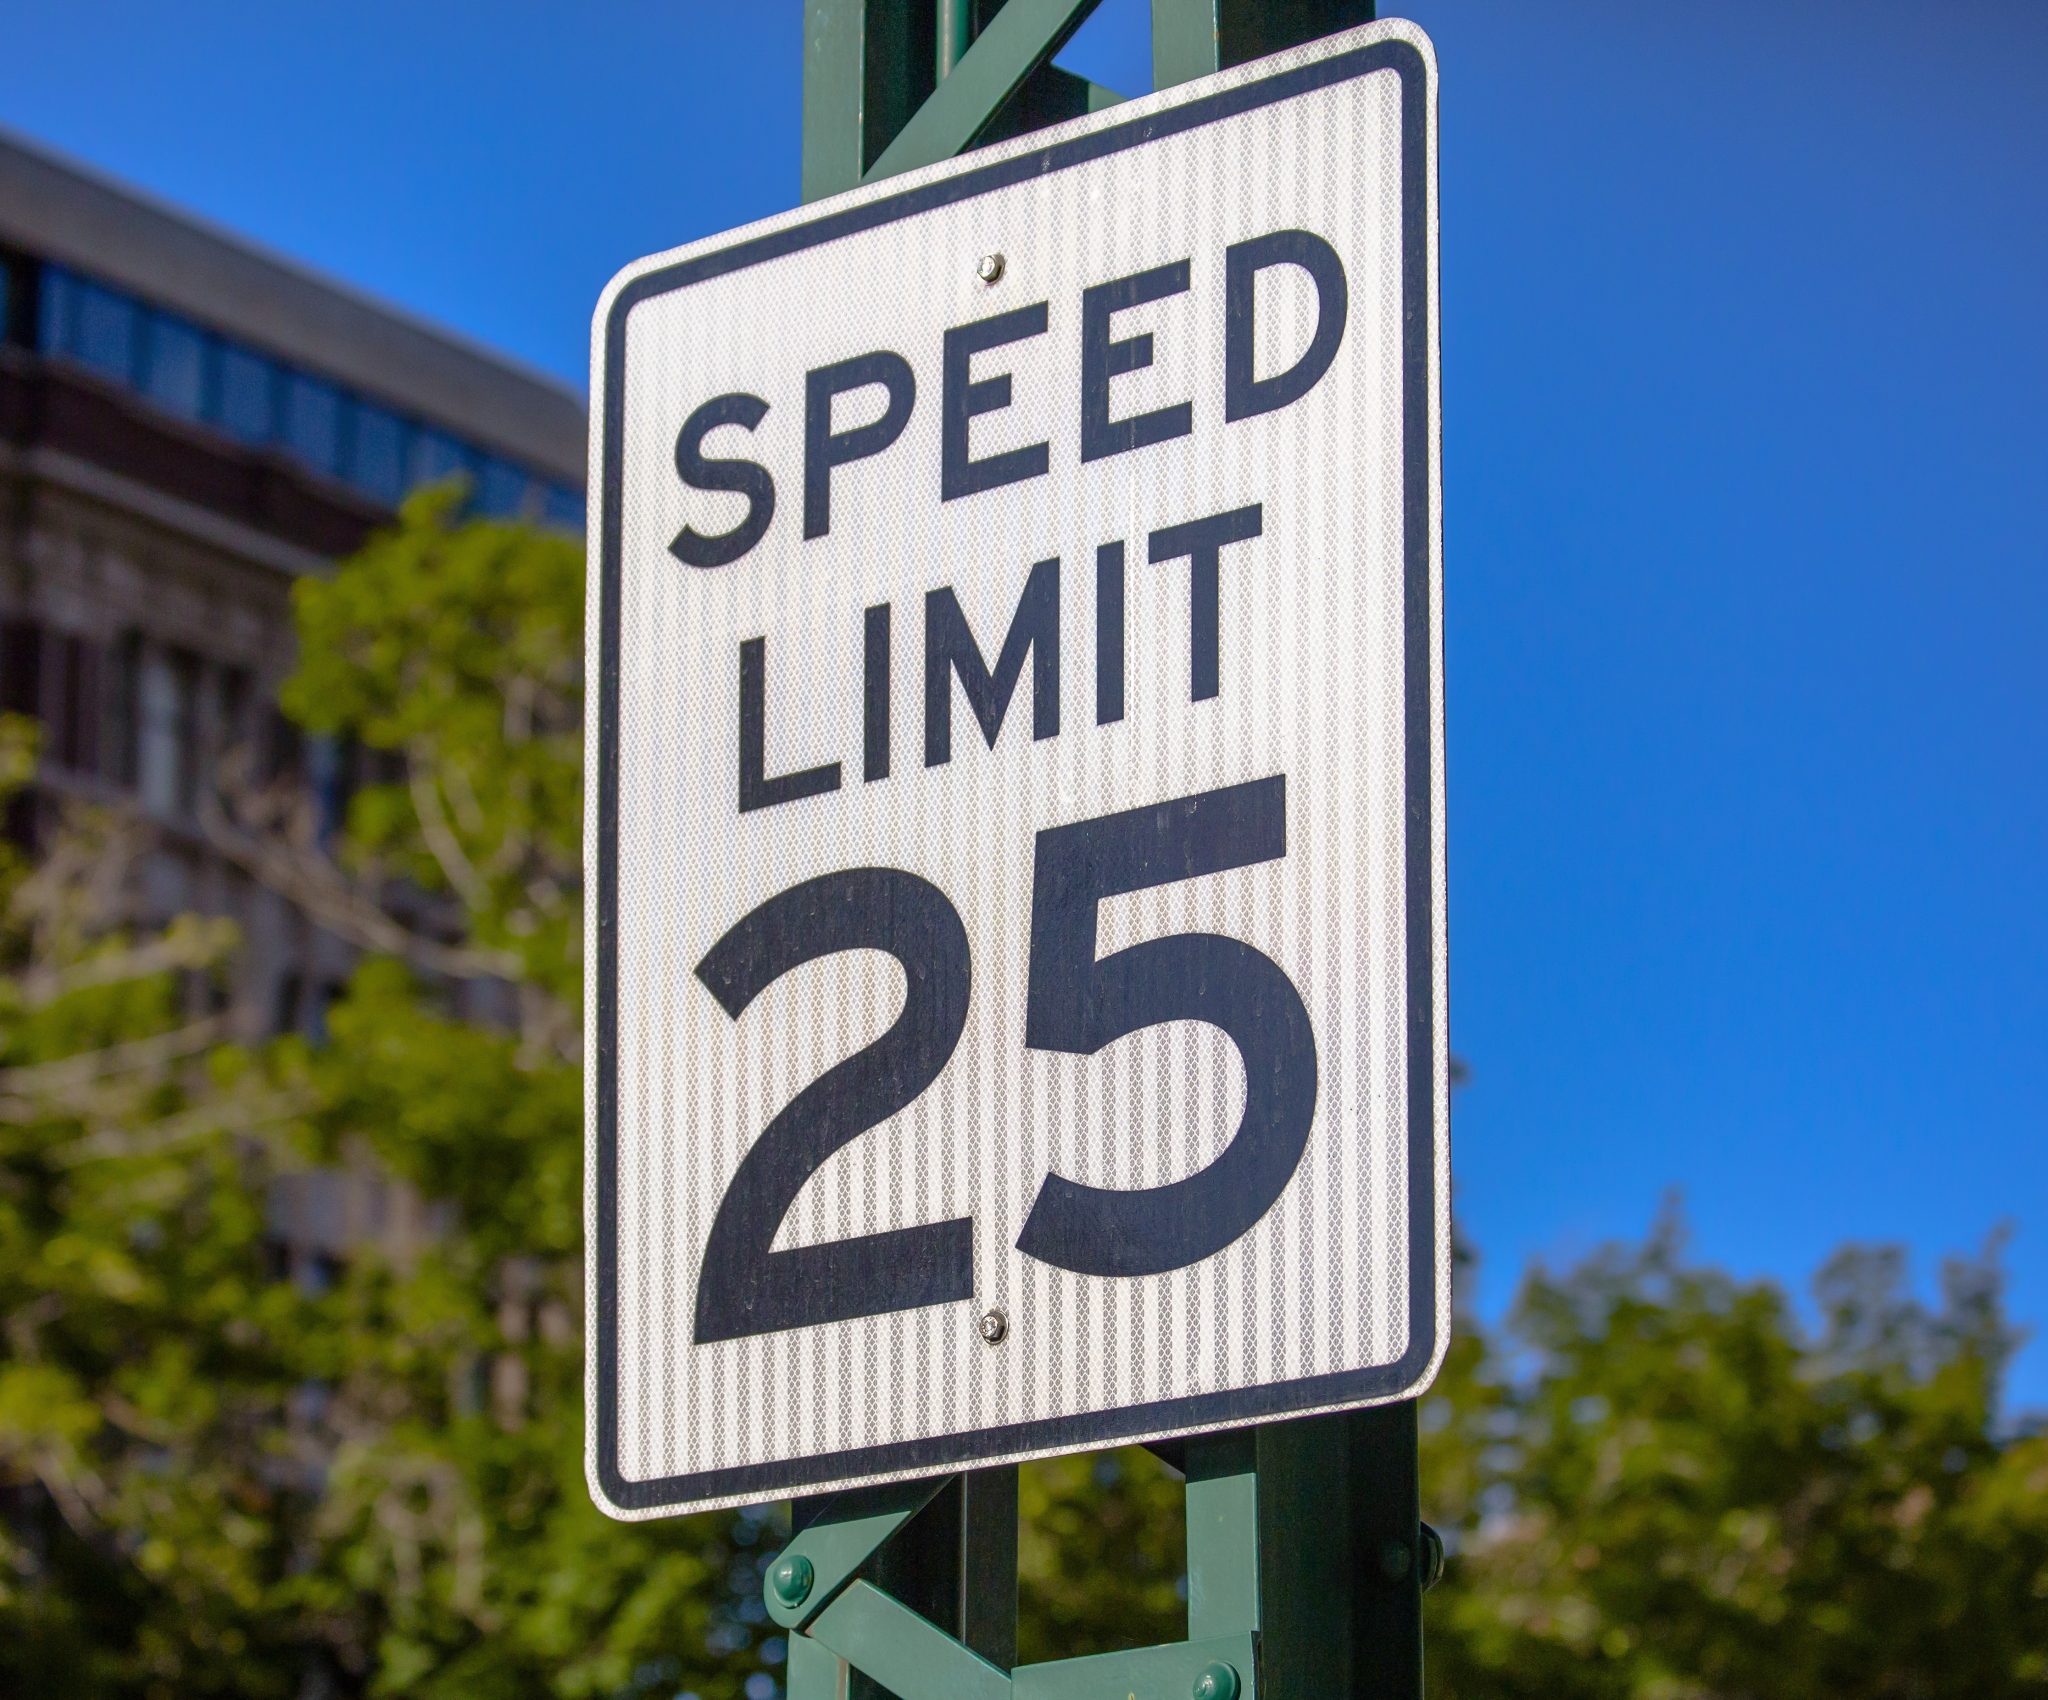 Speed limit 25 sign closeup